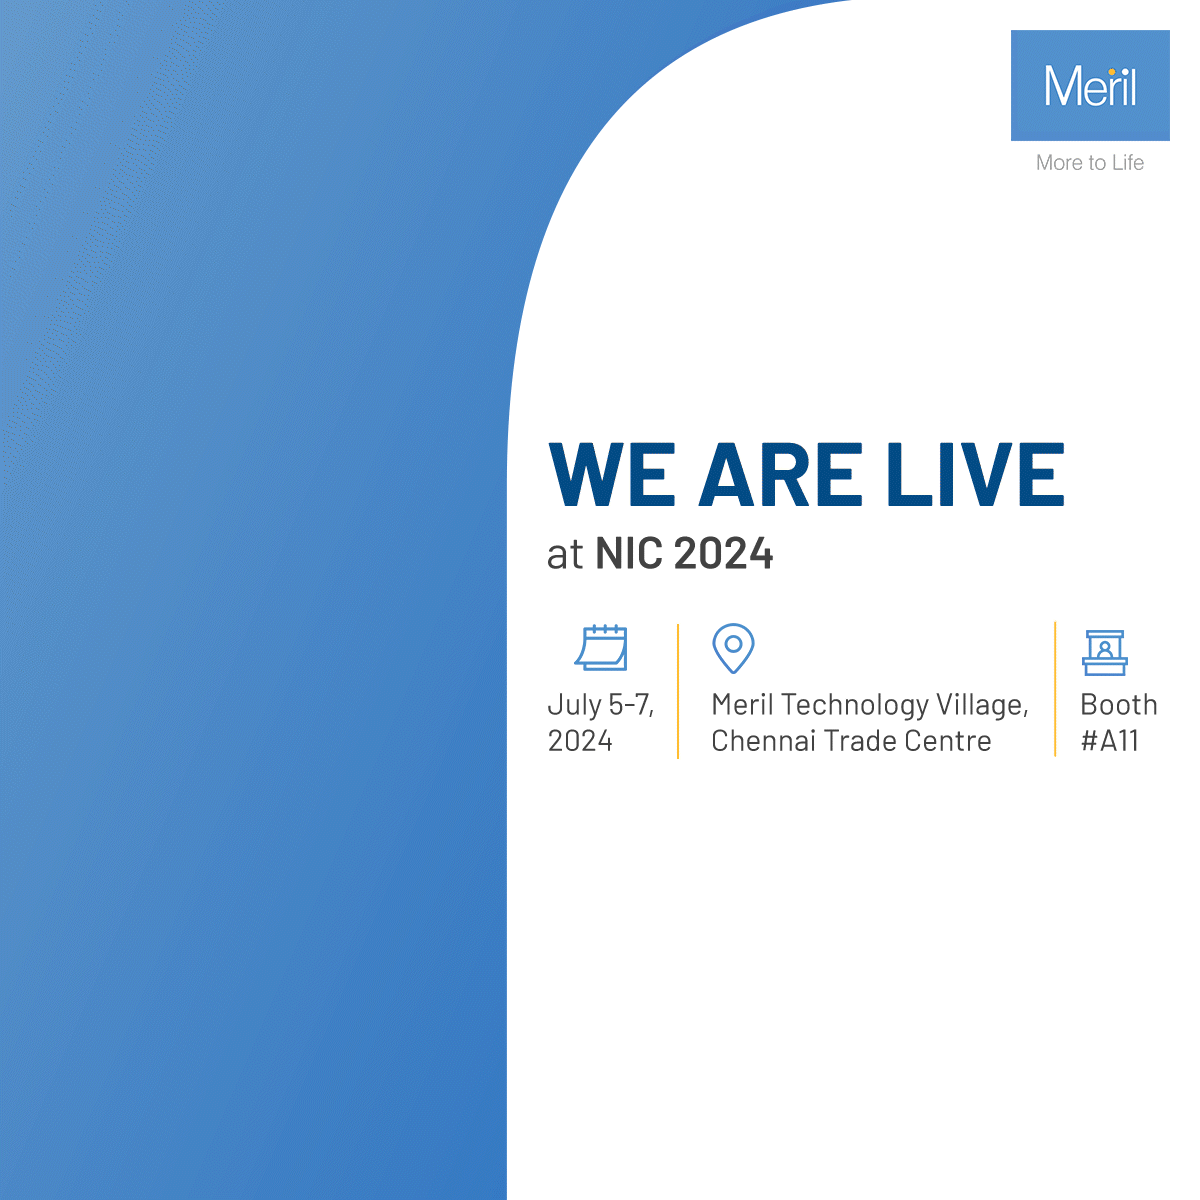 NIC 2024 is LIVE!